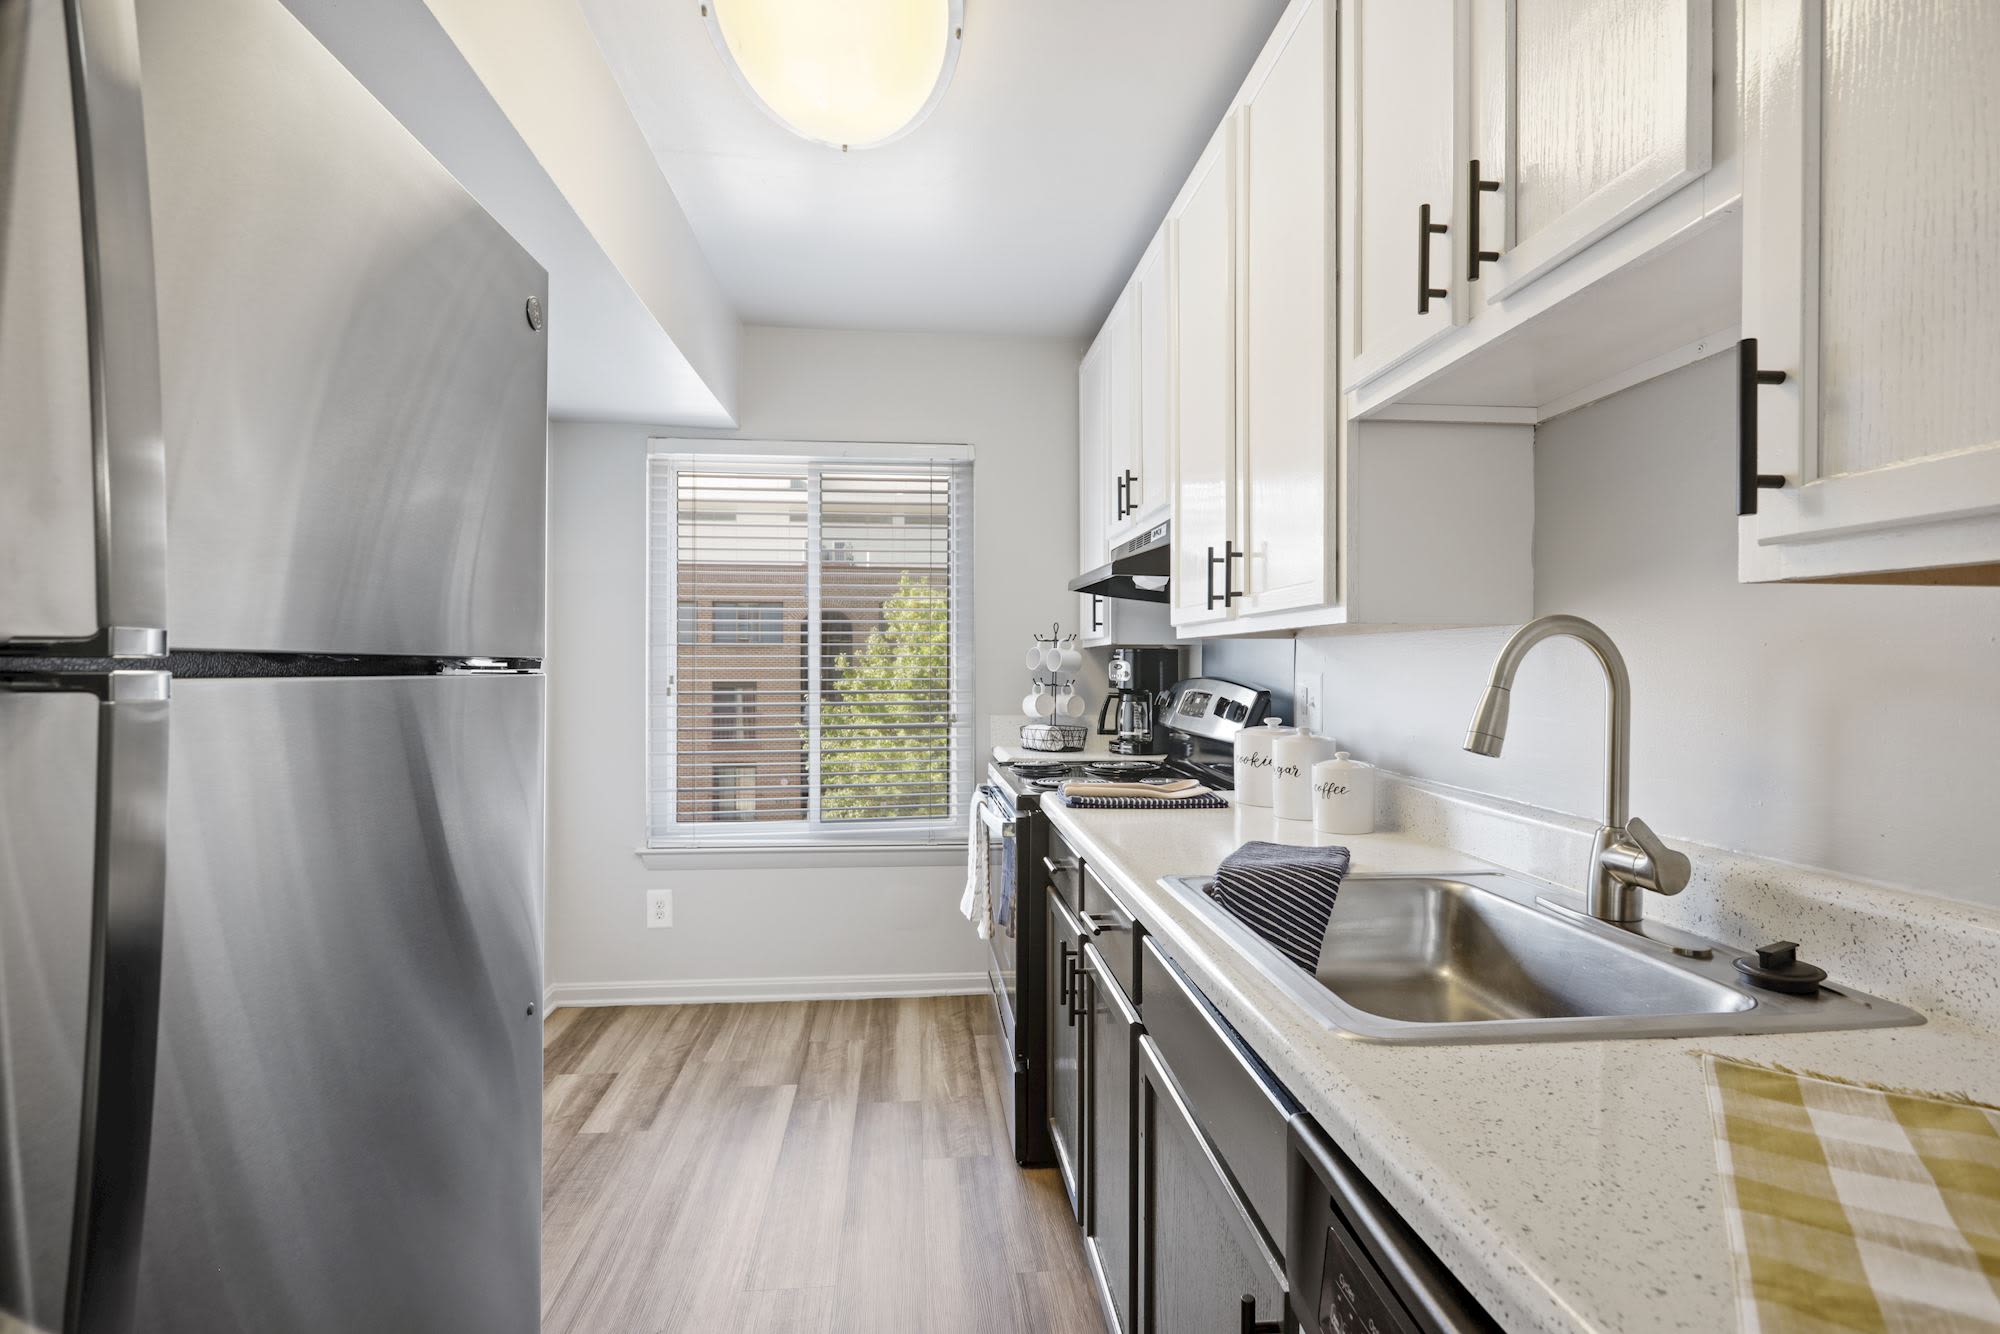 Updated kitchen at Washington Apartments in Washington